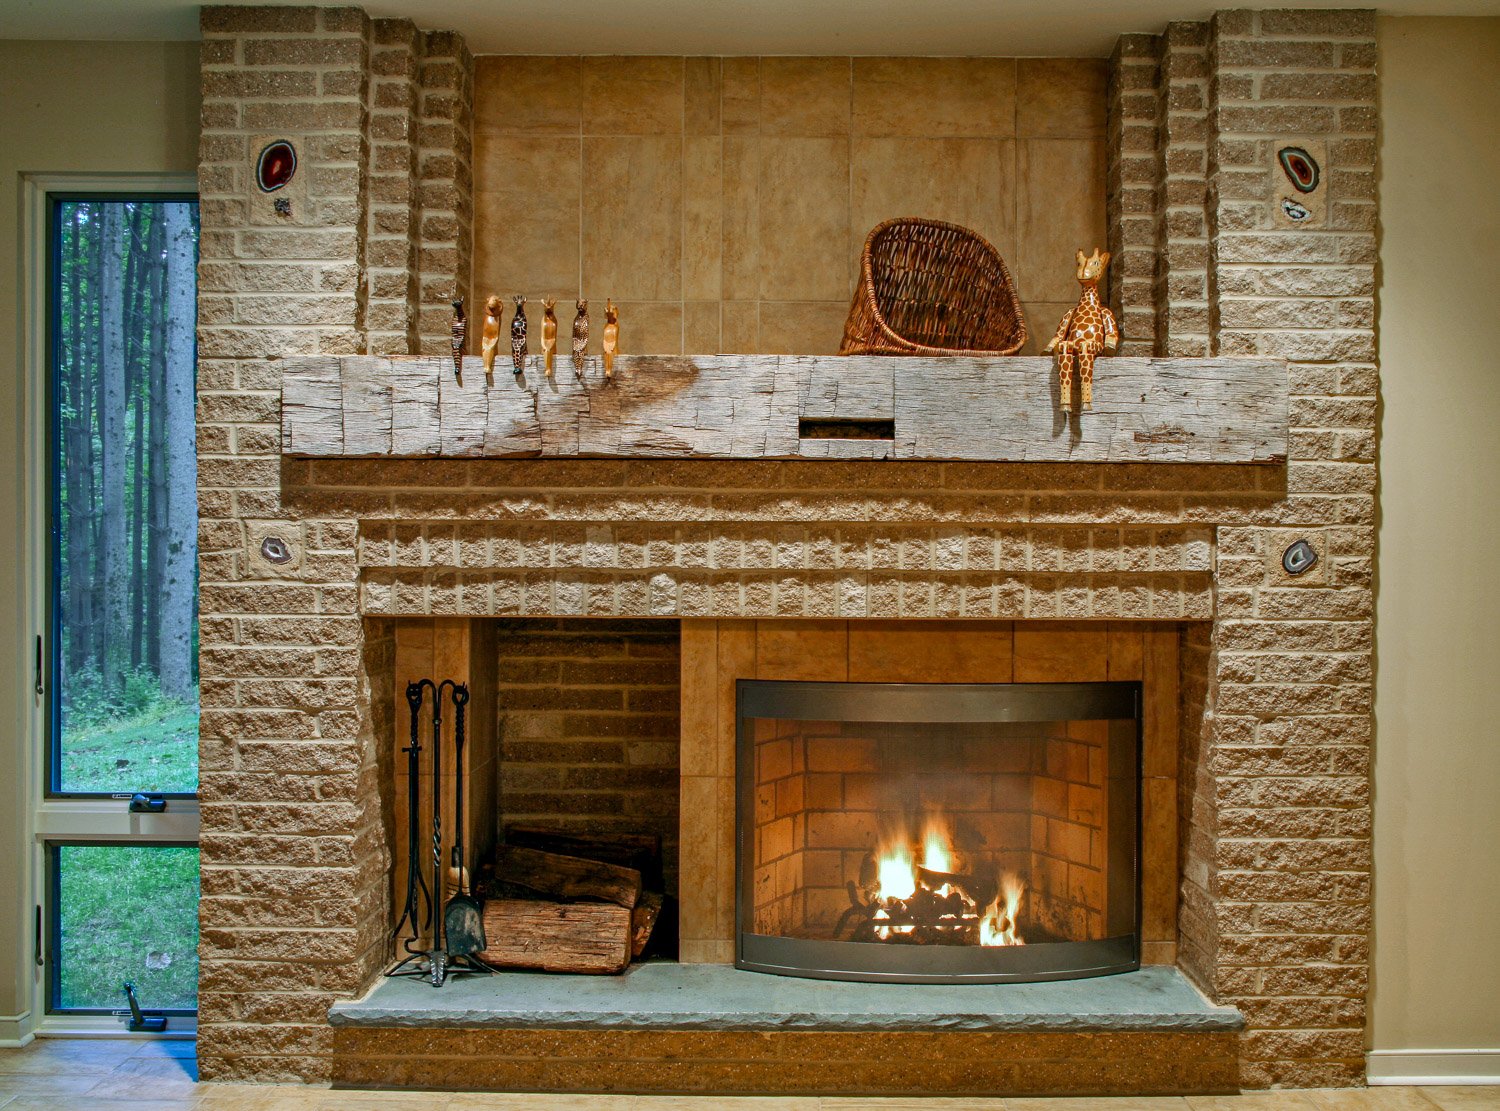 Woods: Fireplace